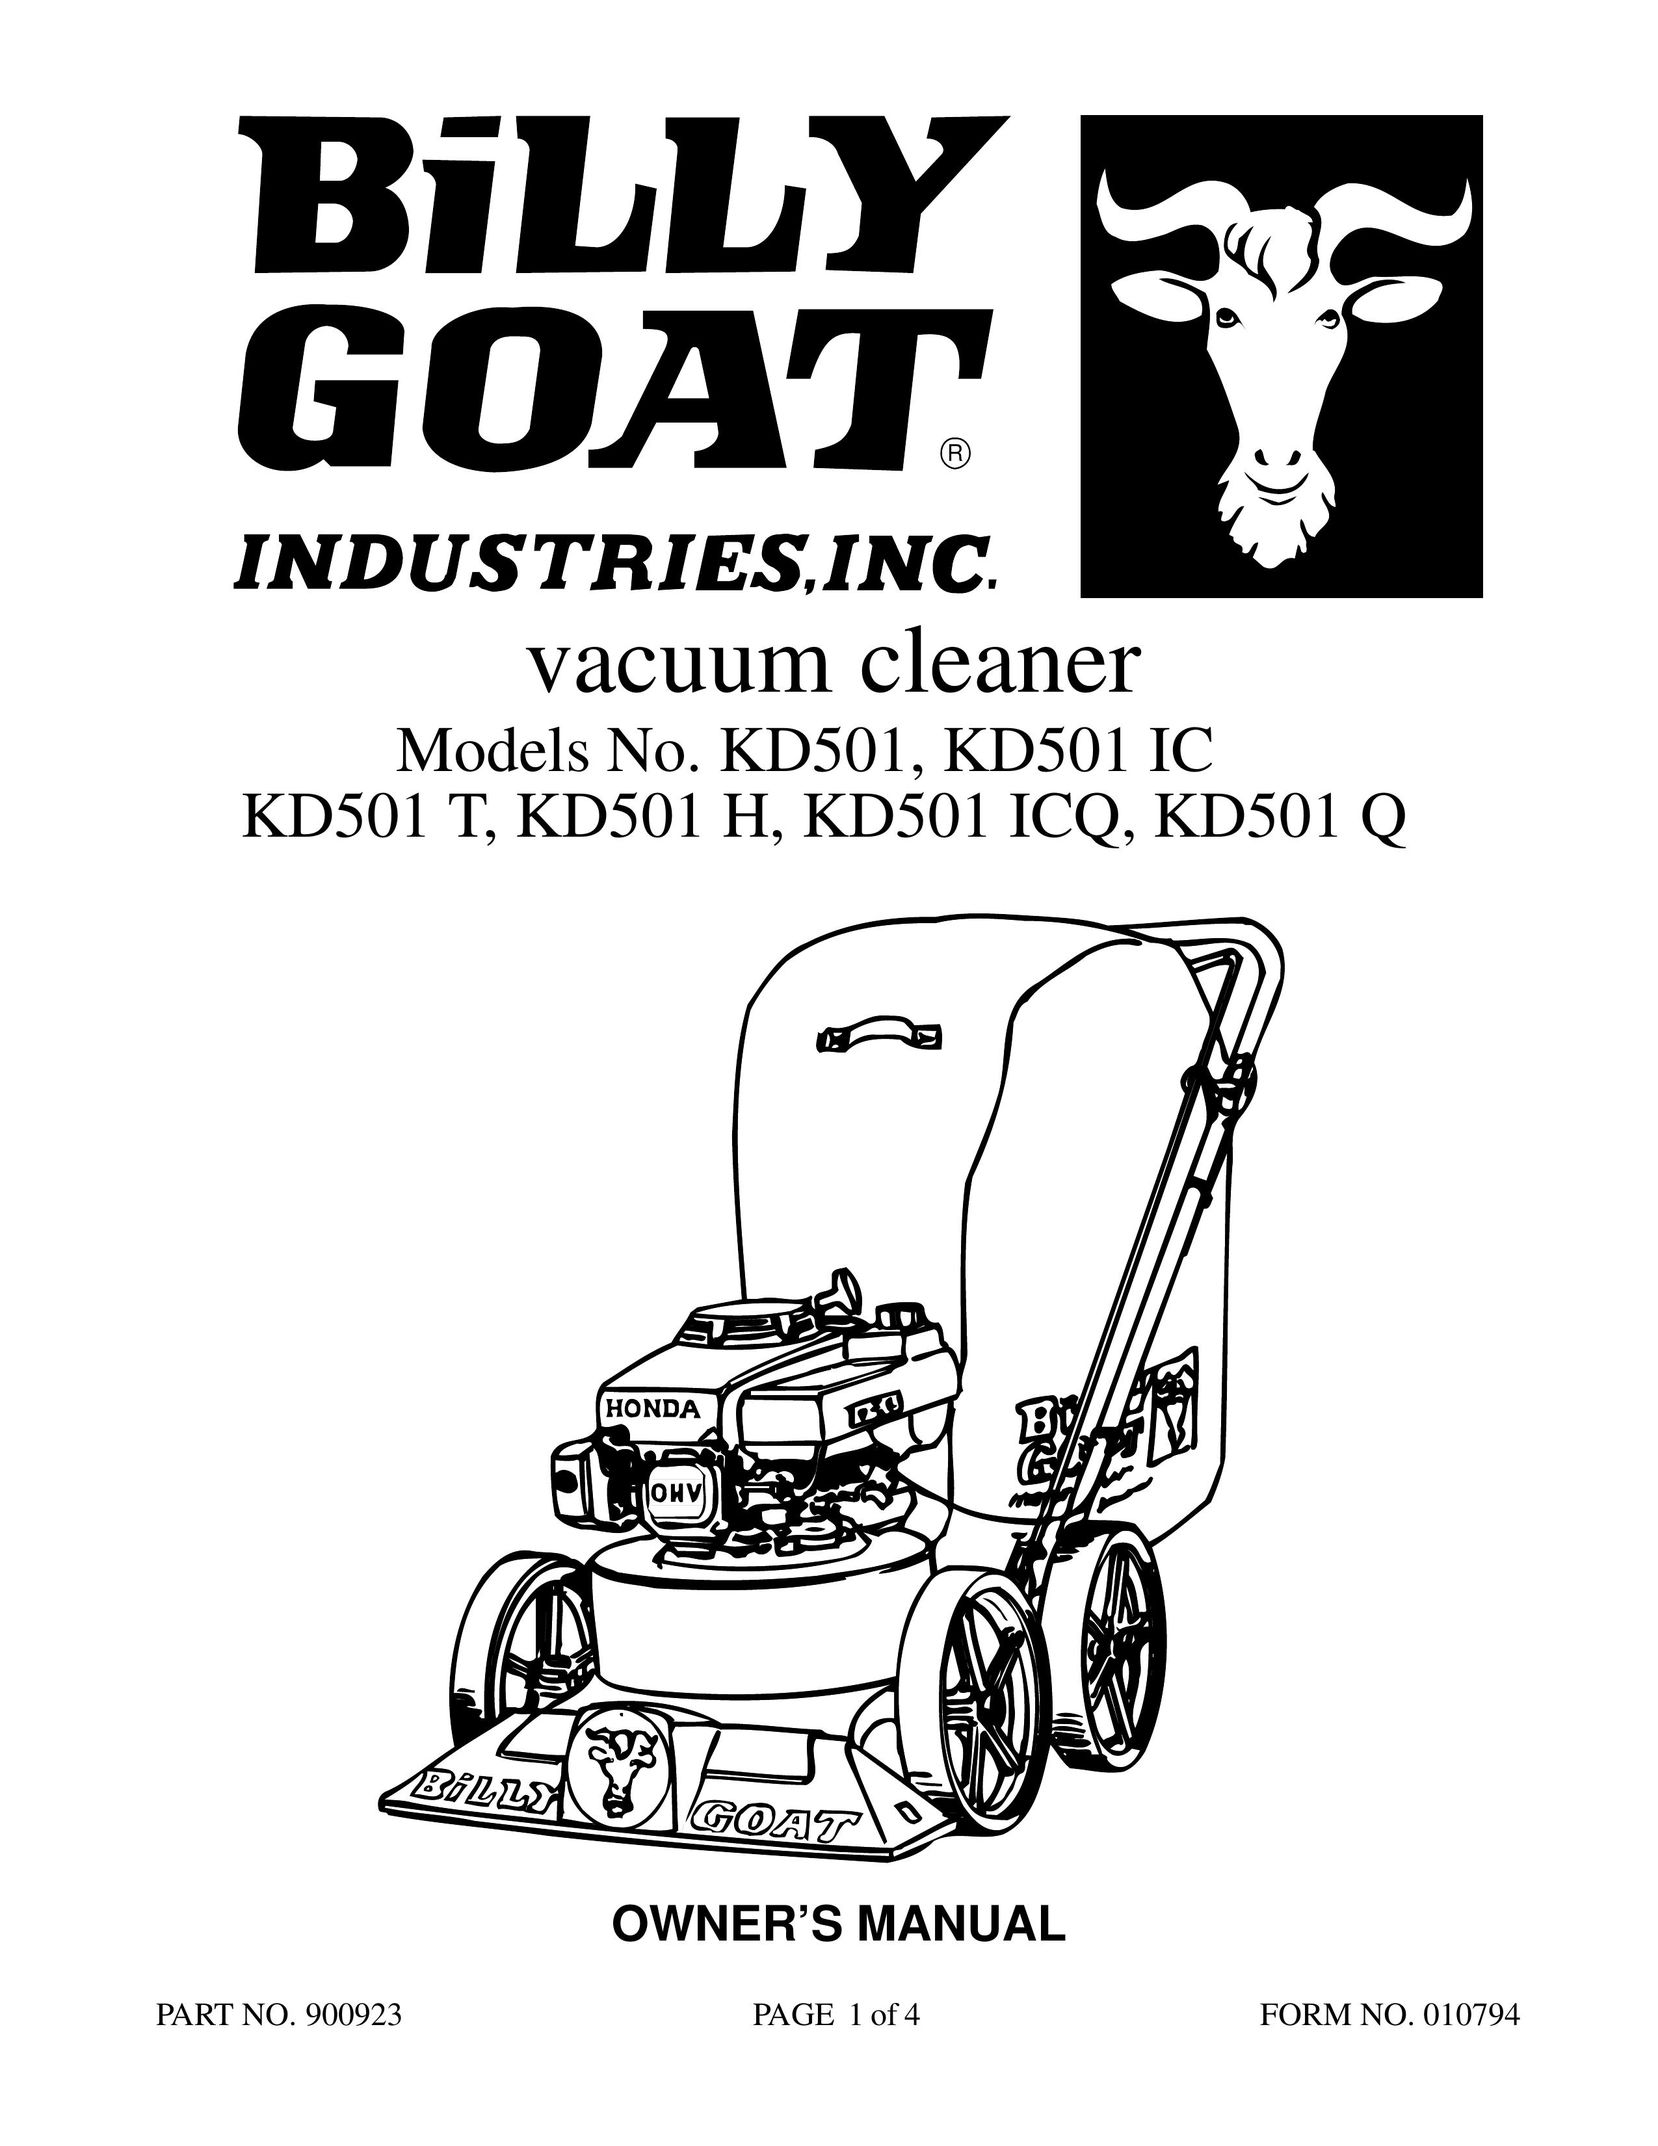 Billy Goat KD501 H Vacuum Cleaner User Manual